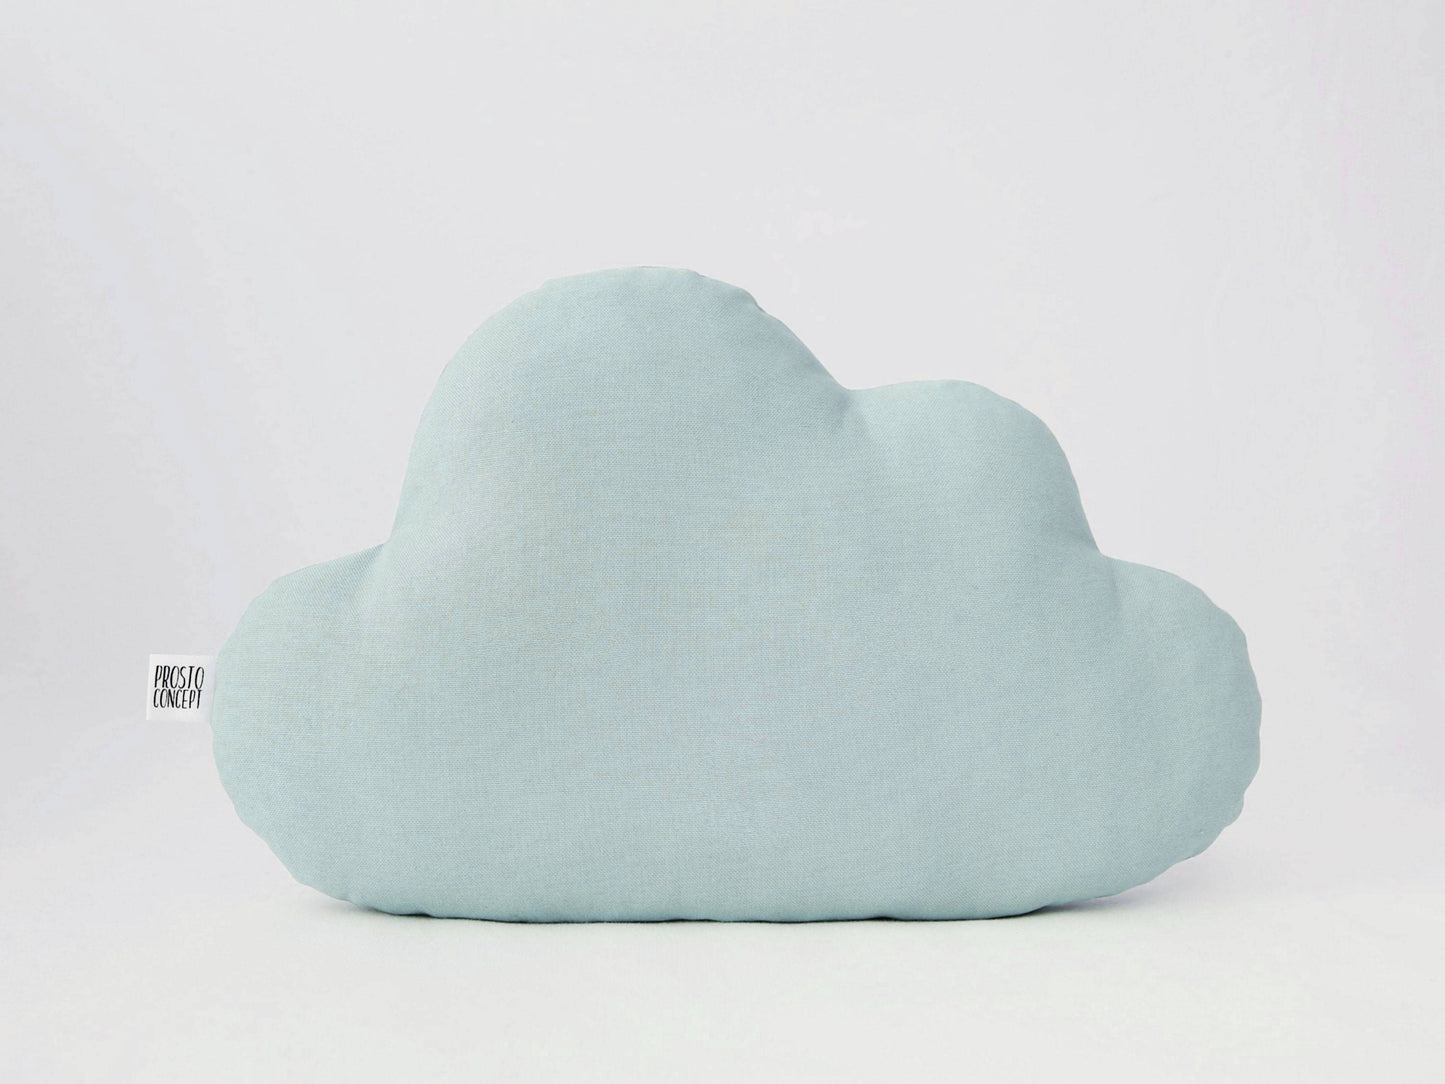 Dusty Mint Cloud Pillow